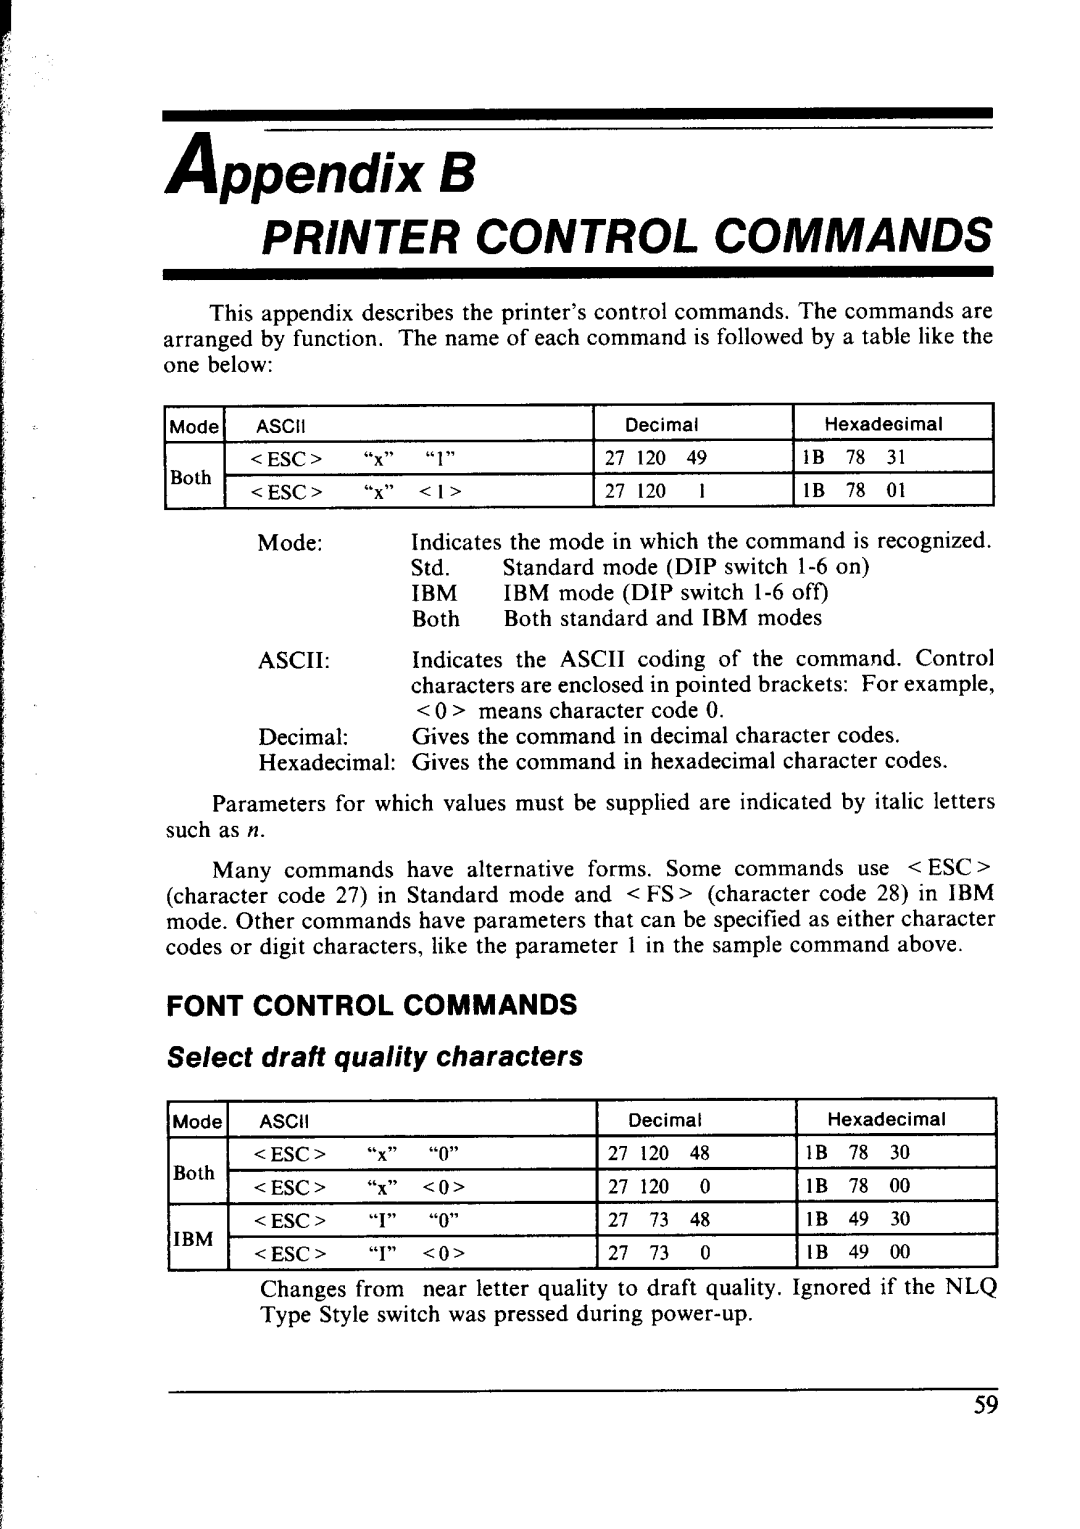 Star Micronics NX-1000 manual Printer Control Commands, FONT CONTROL COMMANDS Select draft quality characters 